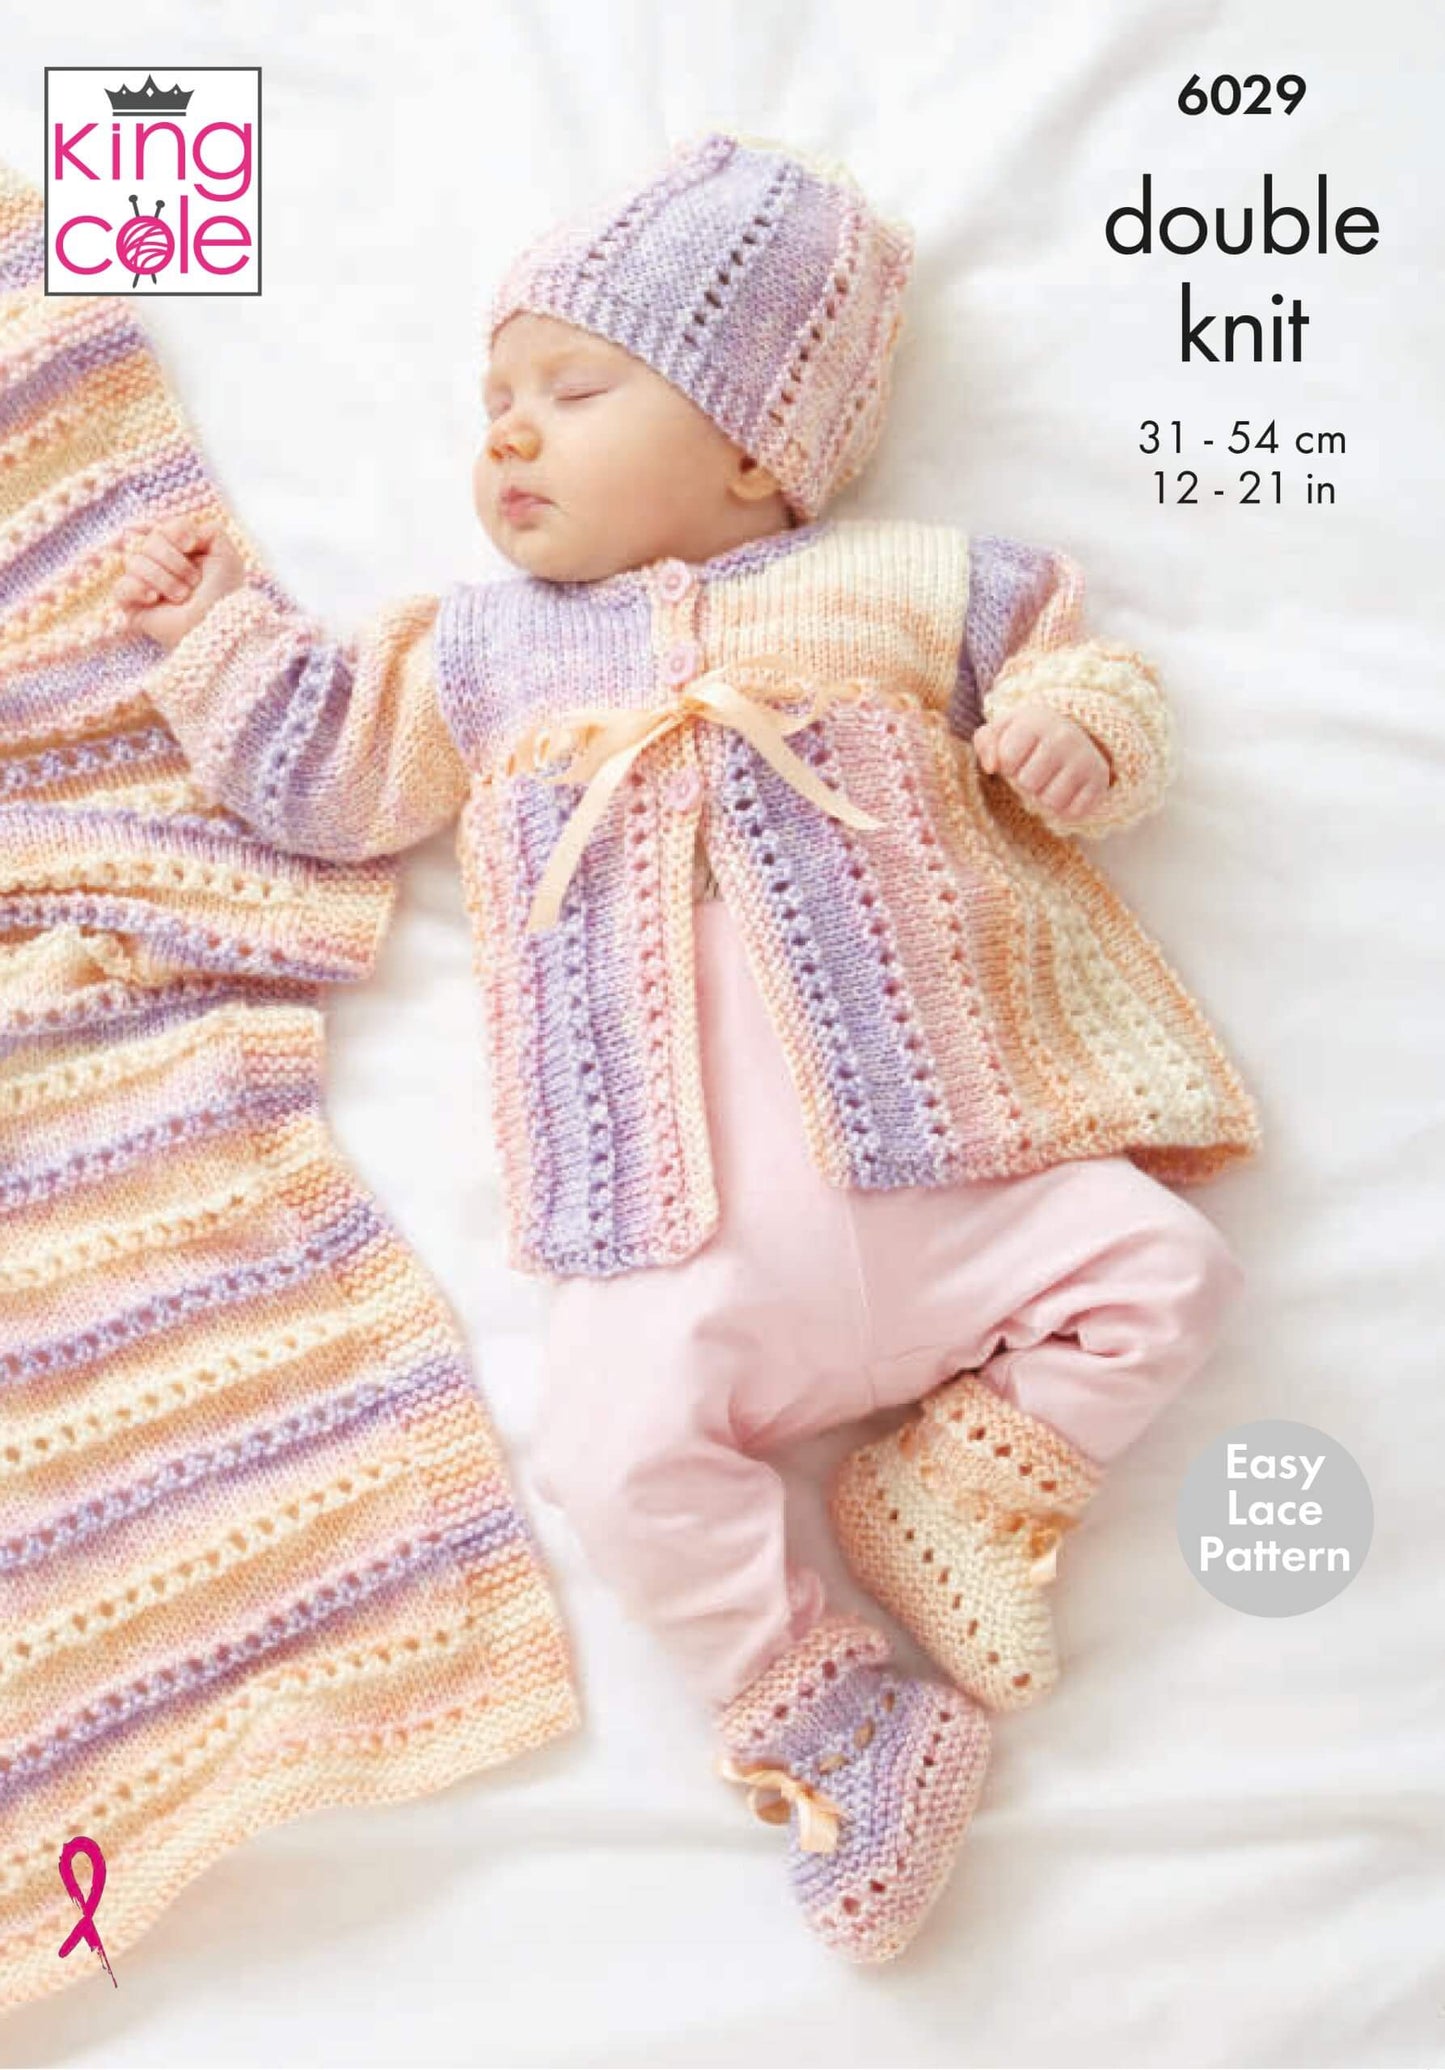 Knitting Pattern 6029 - Cardigan, Matinee Coat, Hat, Booties & Blanket Knitted in Cutie Pie DK